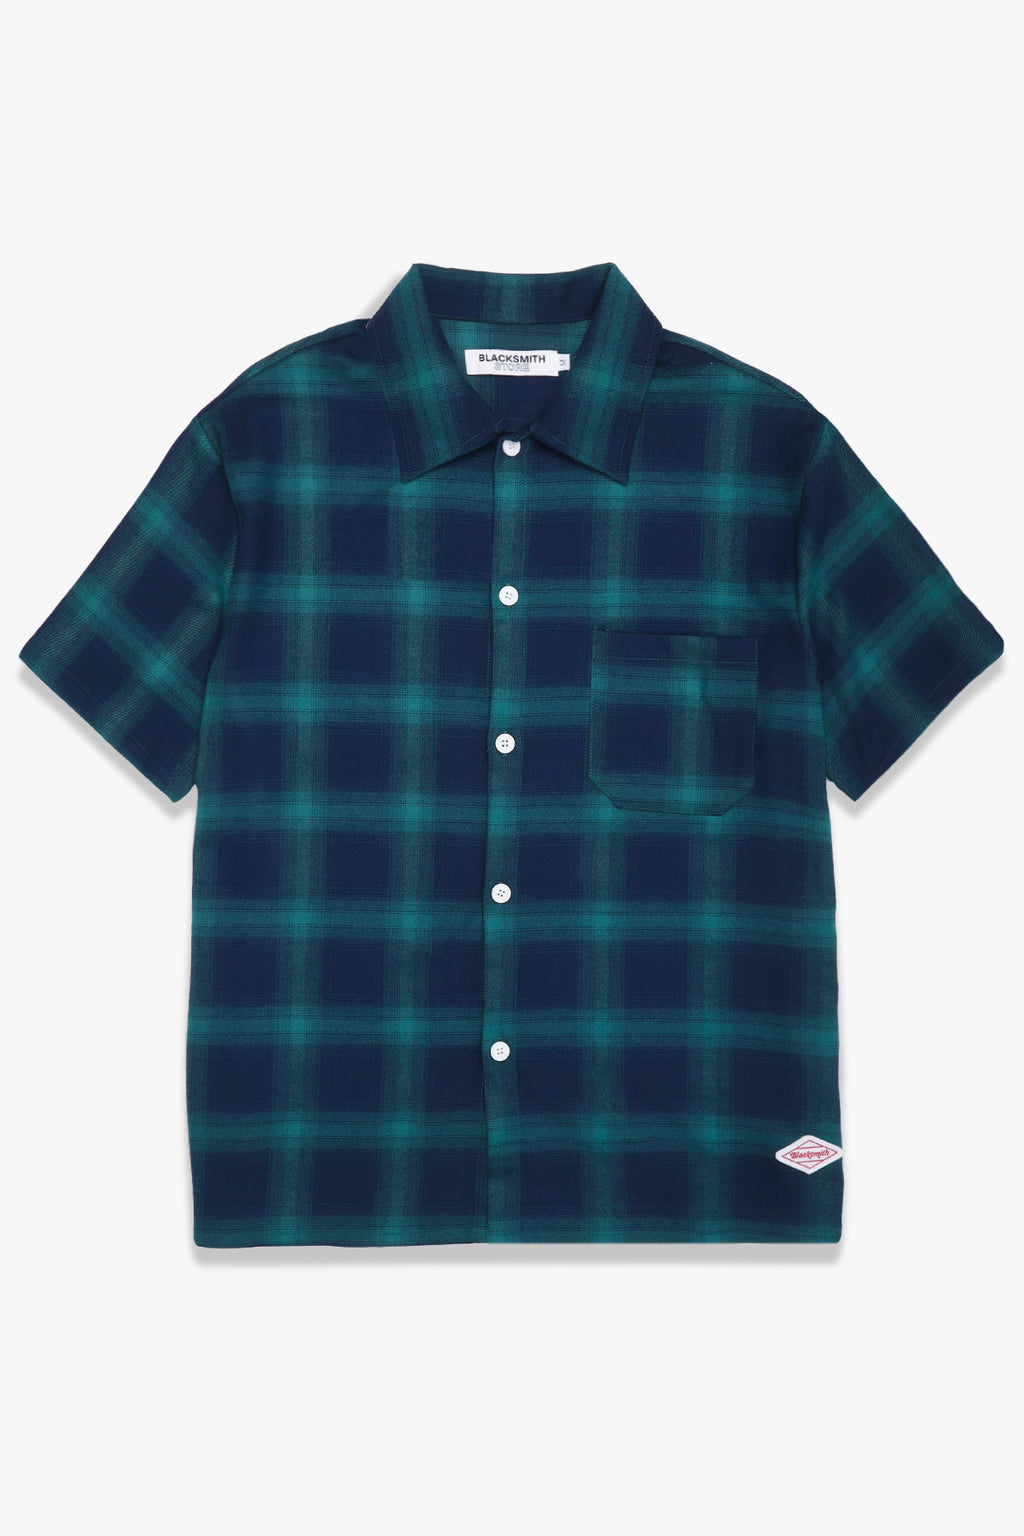 Blacksmith - Shadow Plaid Short Sleeve Shirt - Navy/Green